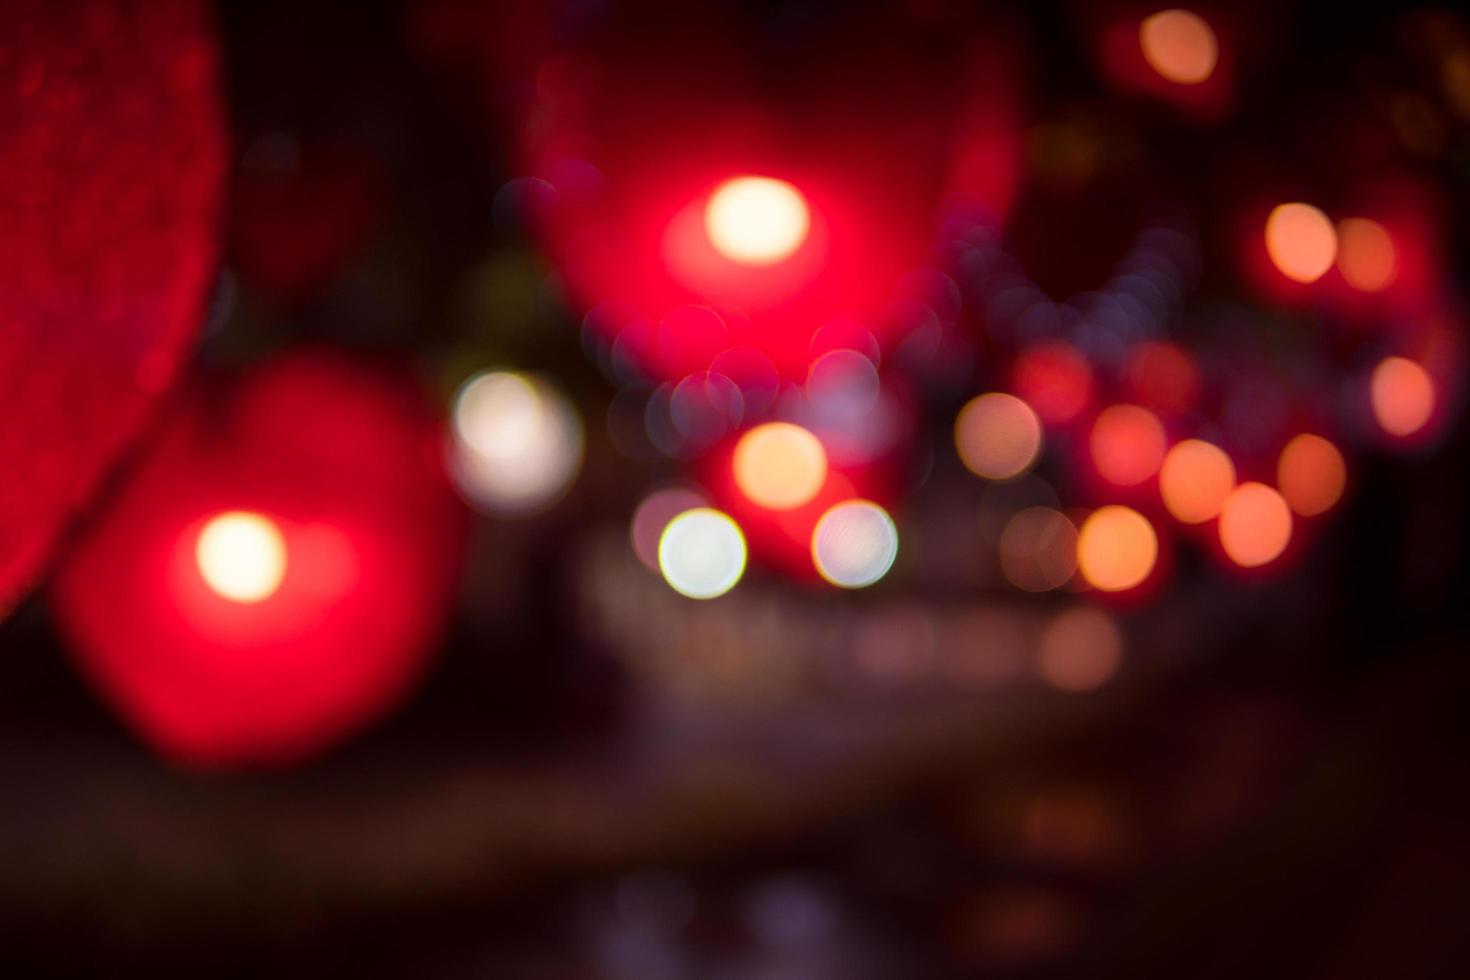 City night light blur bokeh , defocused red heart light background. photo